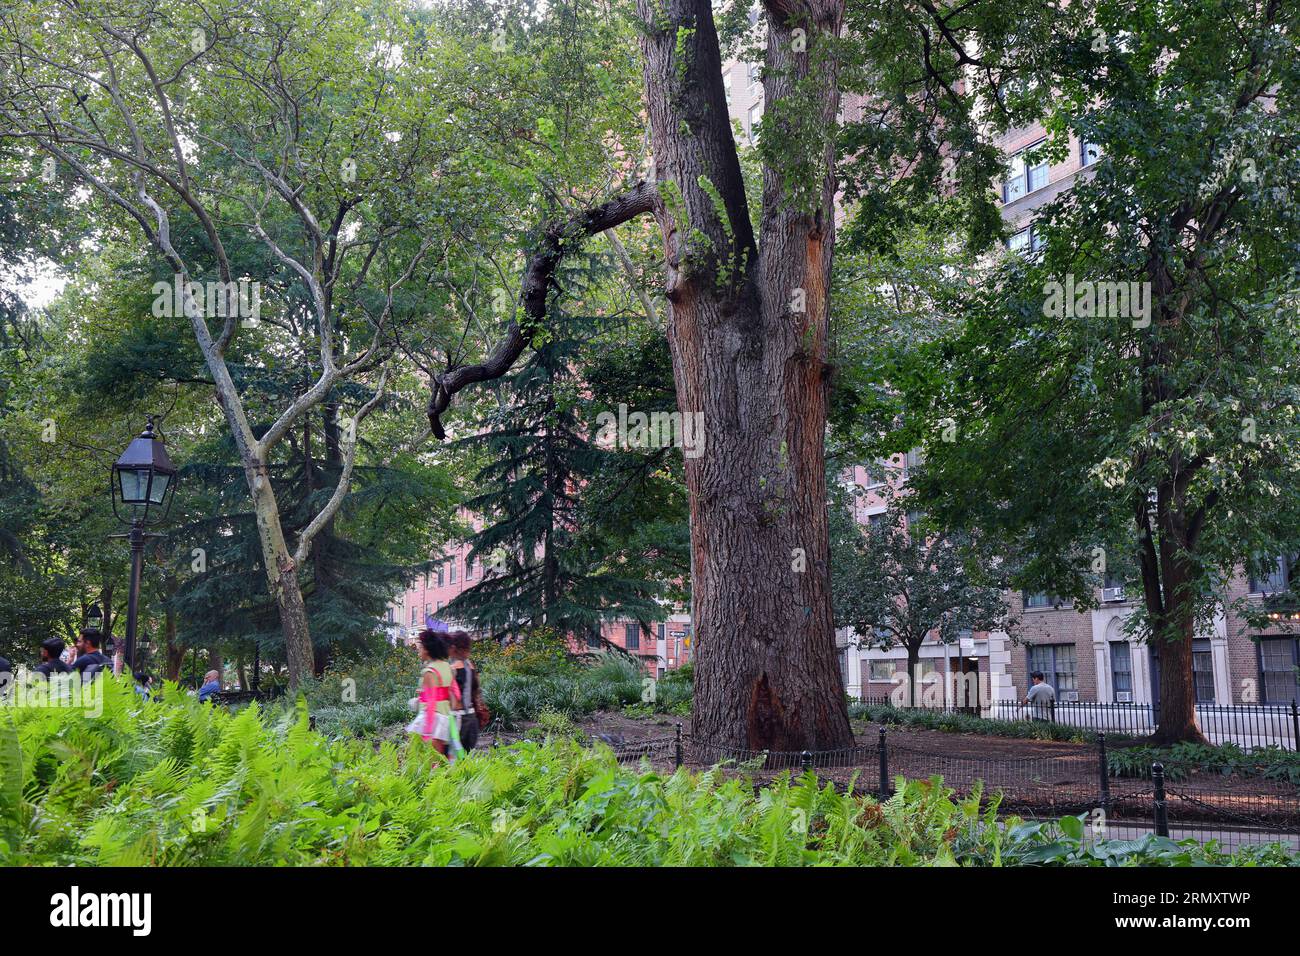 An English Elm (Ulmus procera) nicknamed Hangman's Elm in Washington Square Park, New York City. One of the oldest trees in Manhattan. Stock Photo